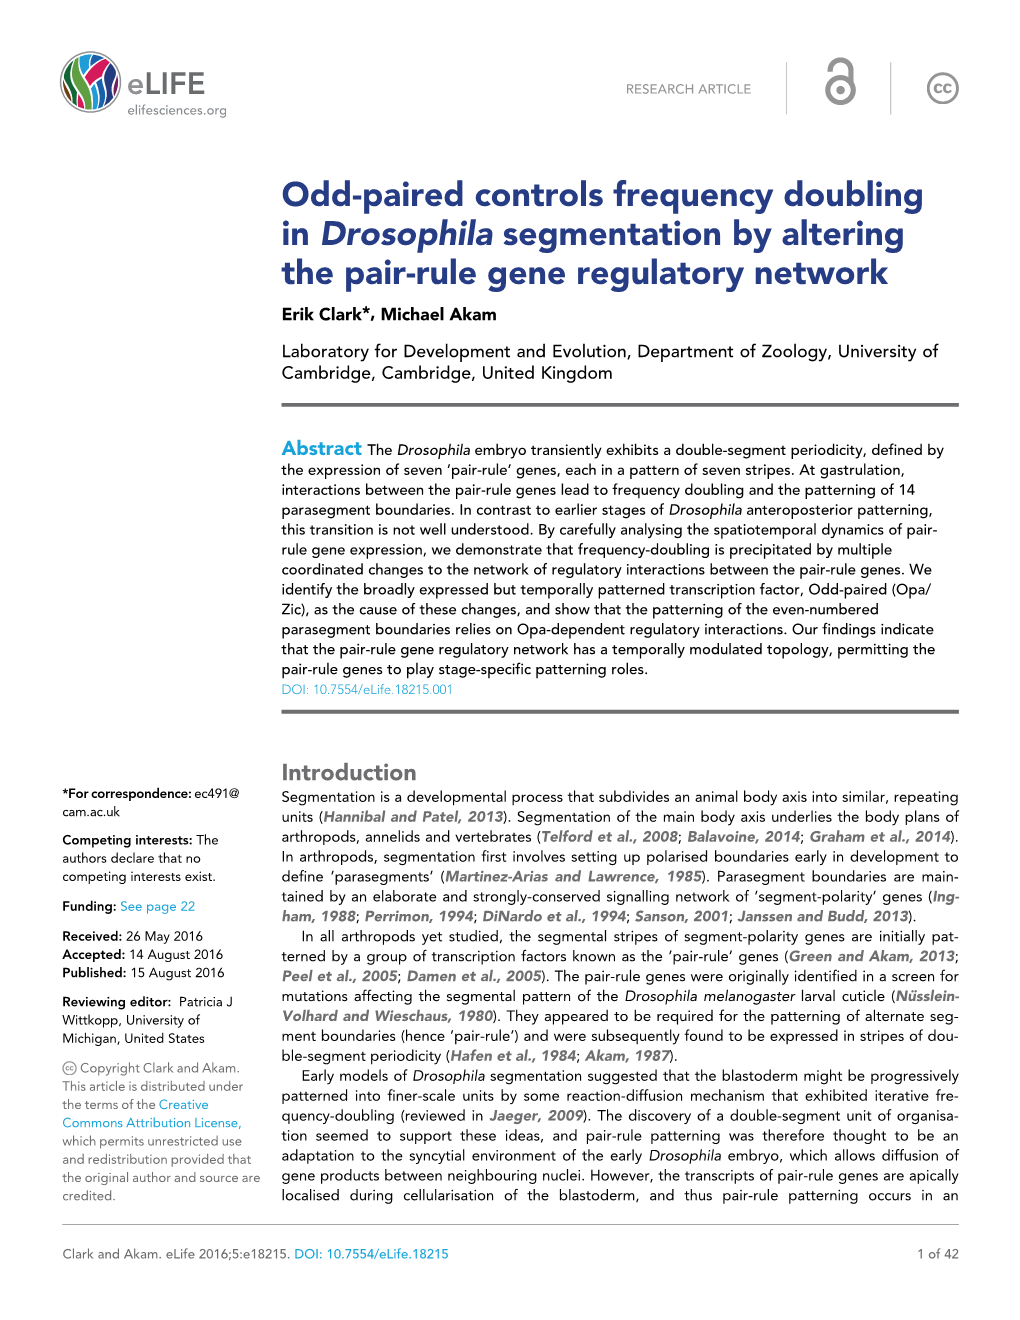 Odd-Paired Controls Frequency Doubling in Drosophila Segmentation by Altering the Pair-Rule Gene Regulatory Network Erik Clark*, Michael Akam